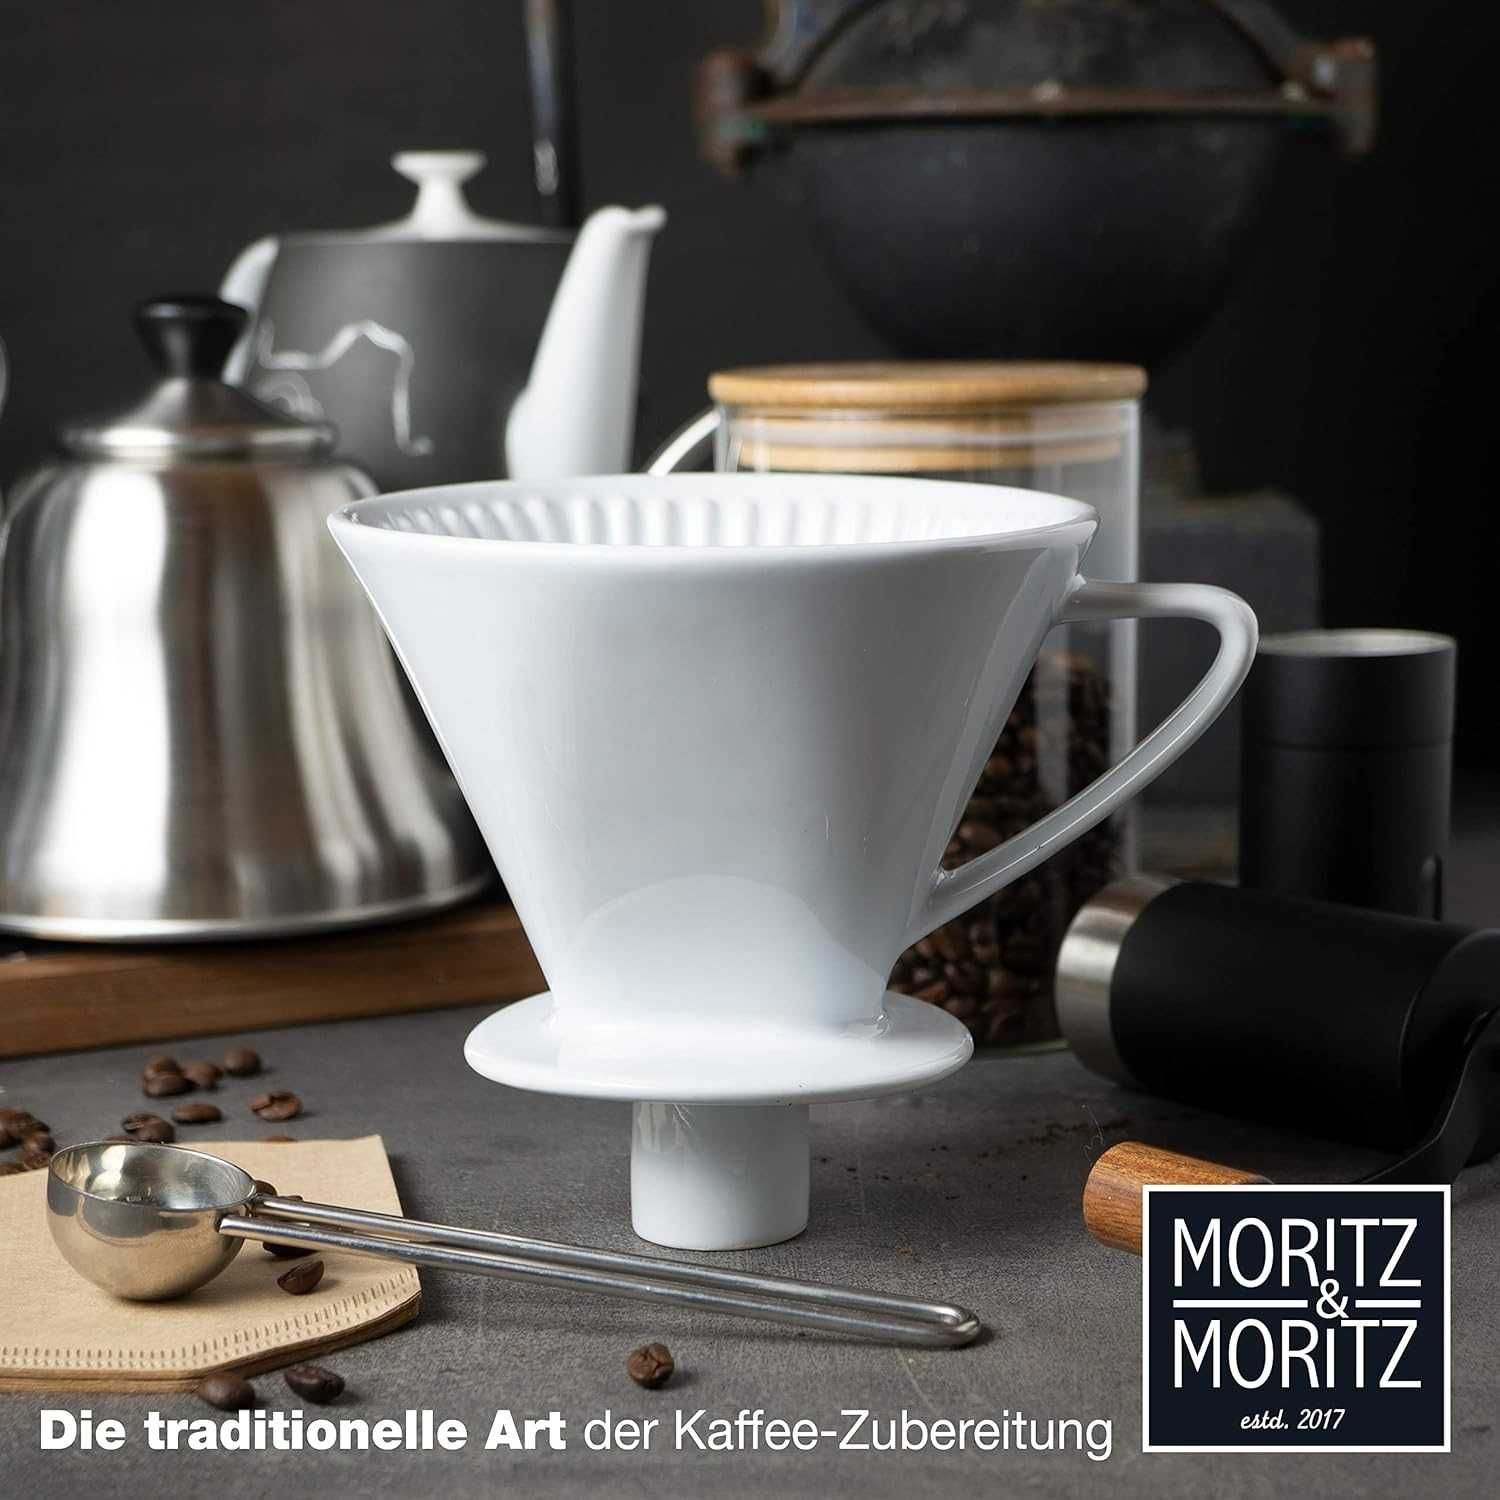 Nowy filtr do kawy / nasadka filtra / dren filtrujący / Moritz !2014!